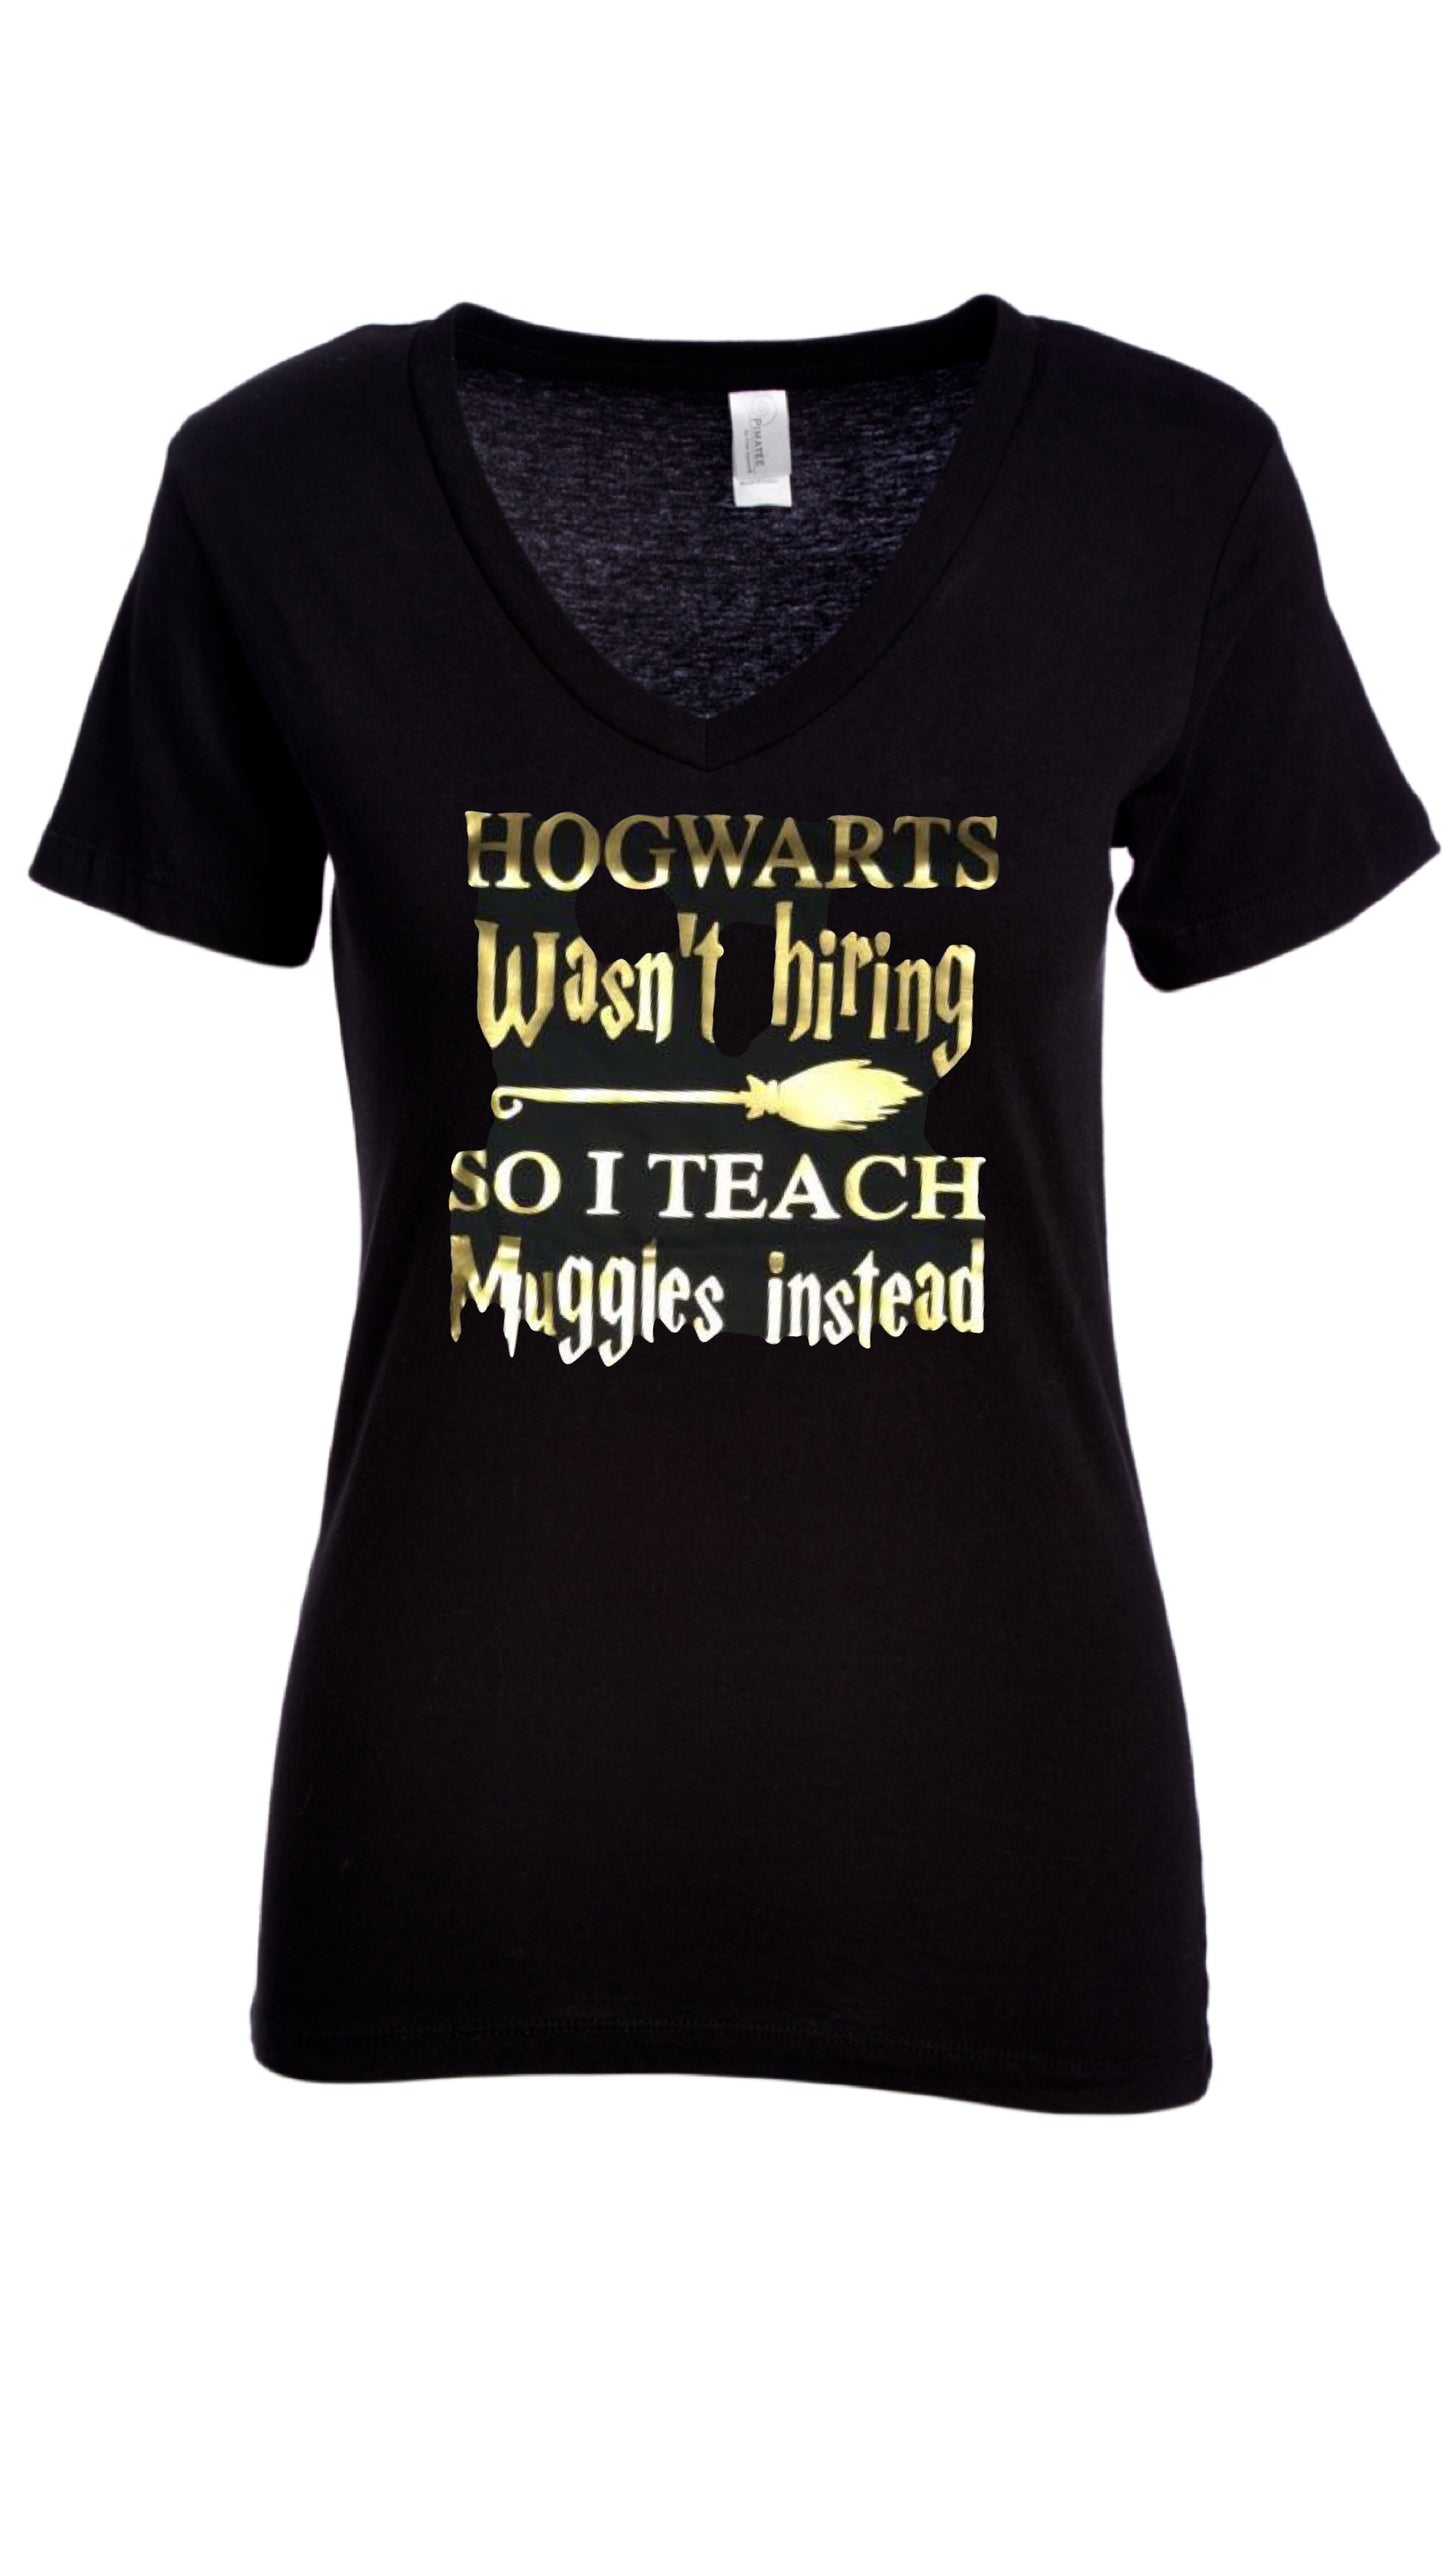 Hogwarts wasnt hiring so I teach muggles instead, hogwarts shirt, teachers gift, harry potter teachers gift